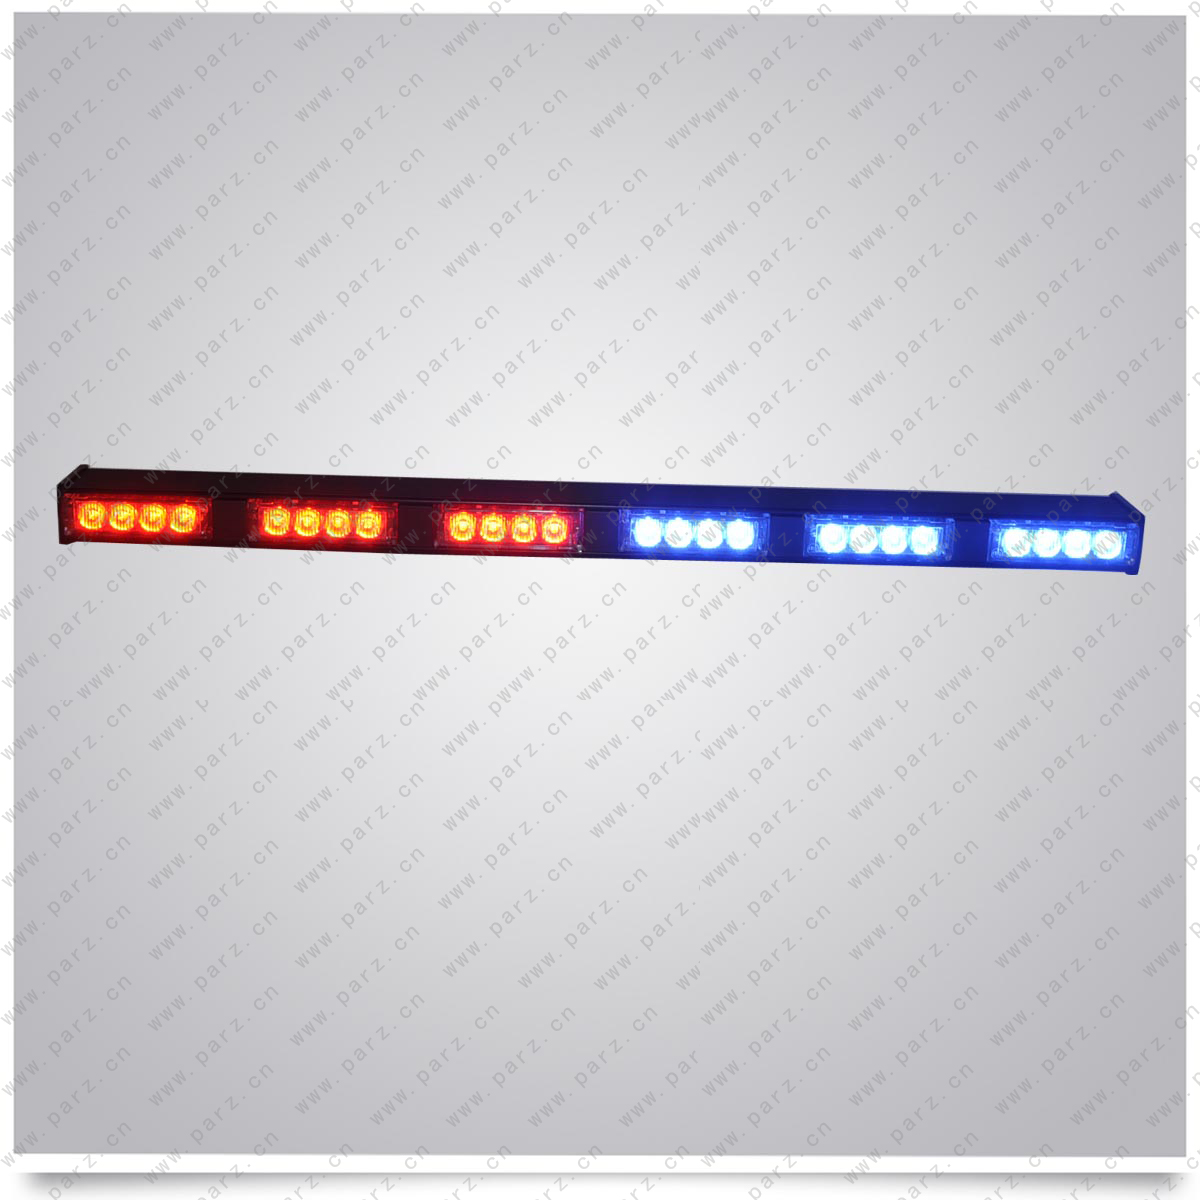 LTF-348B Dual color lightstick